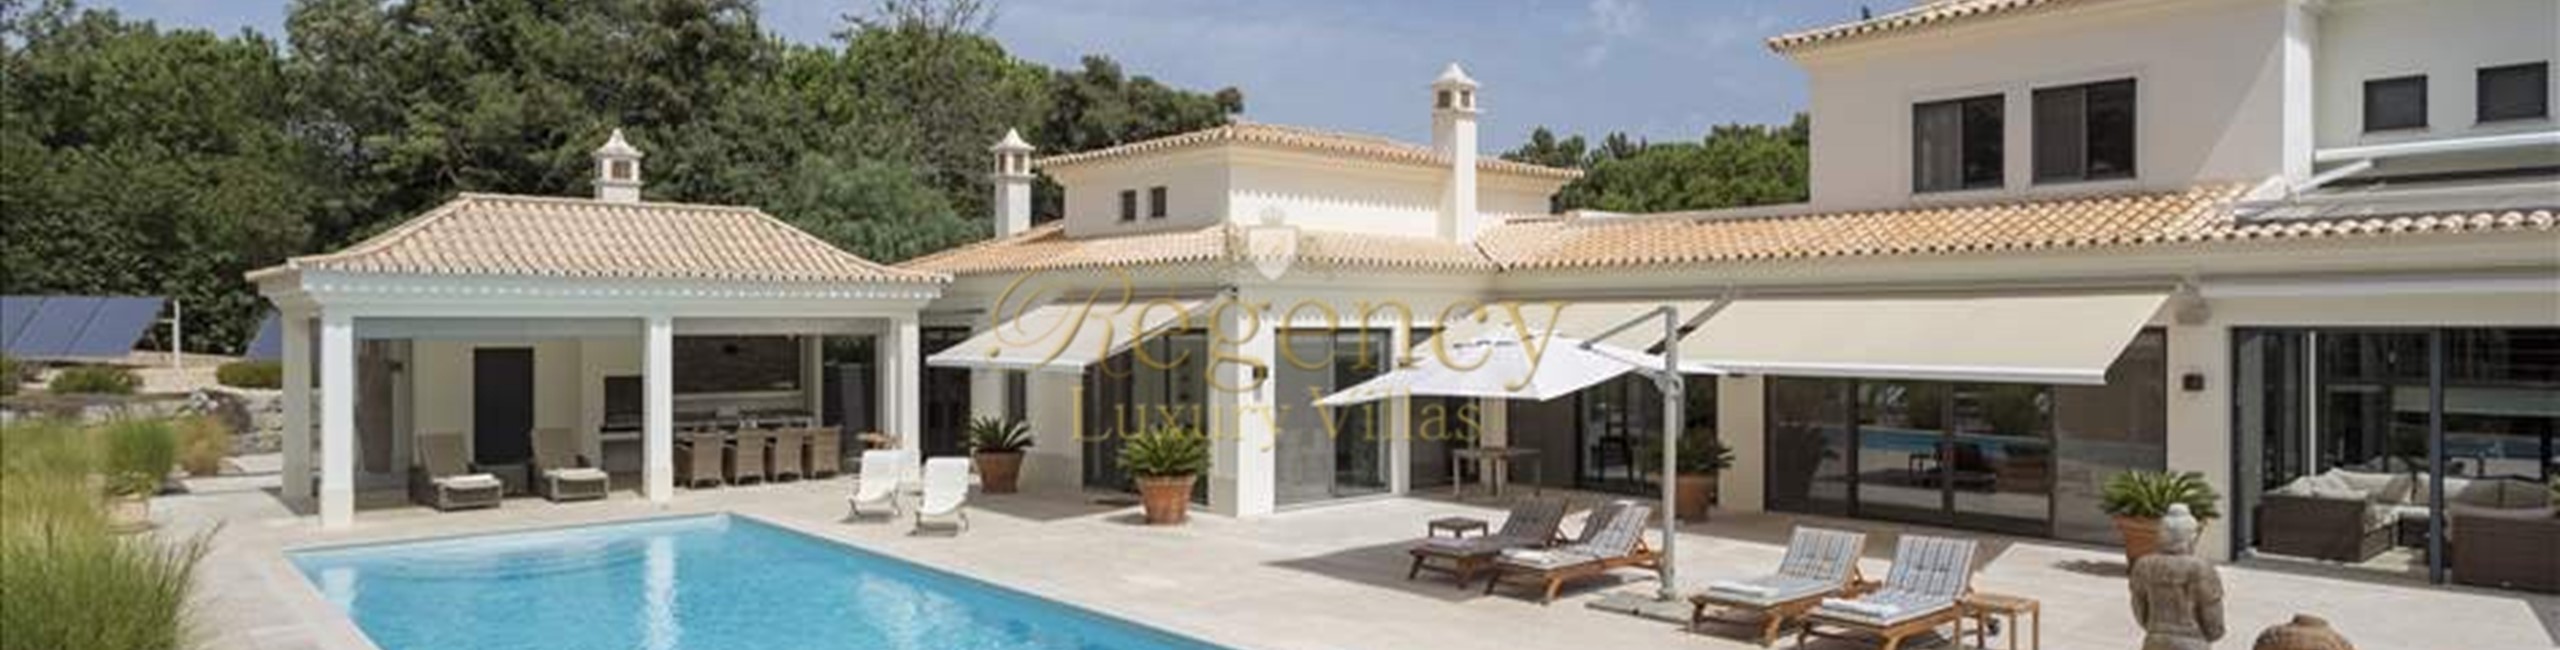 Quinta Do Lago Luxury 5 Bedroom Villa To Rent Portugal Algarve